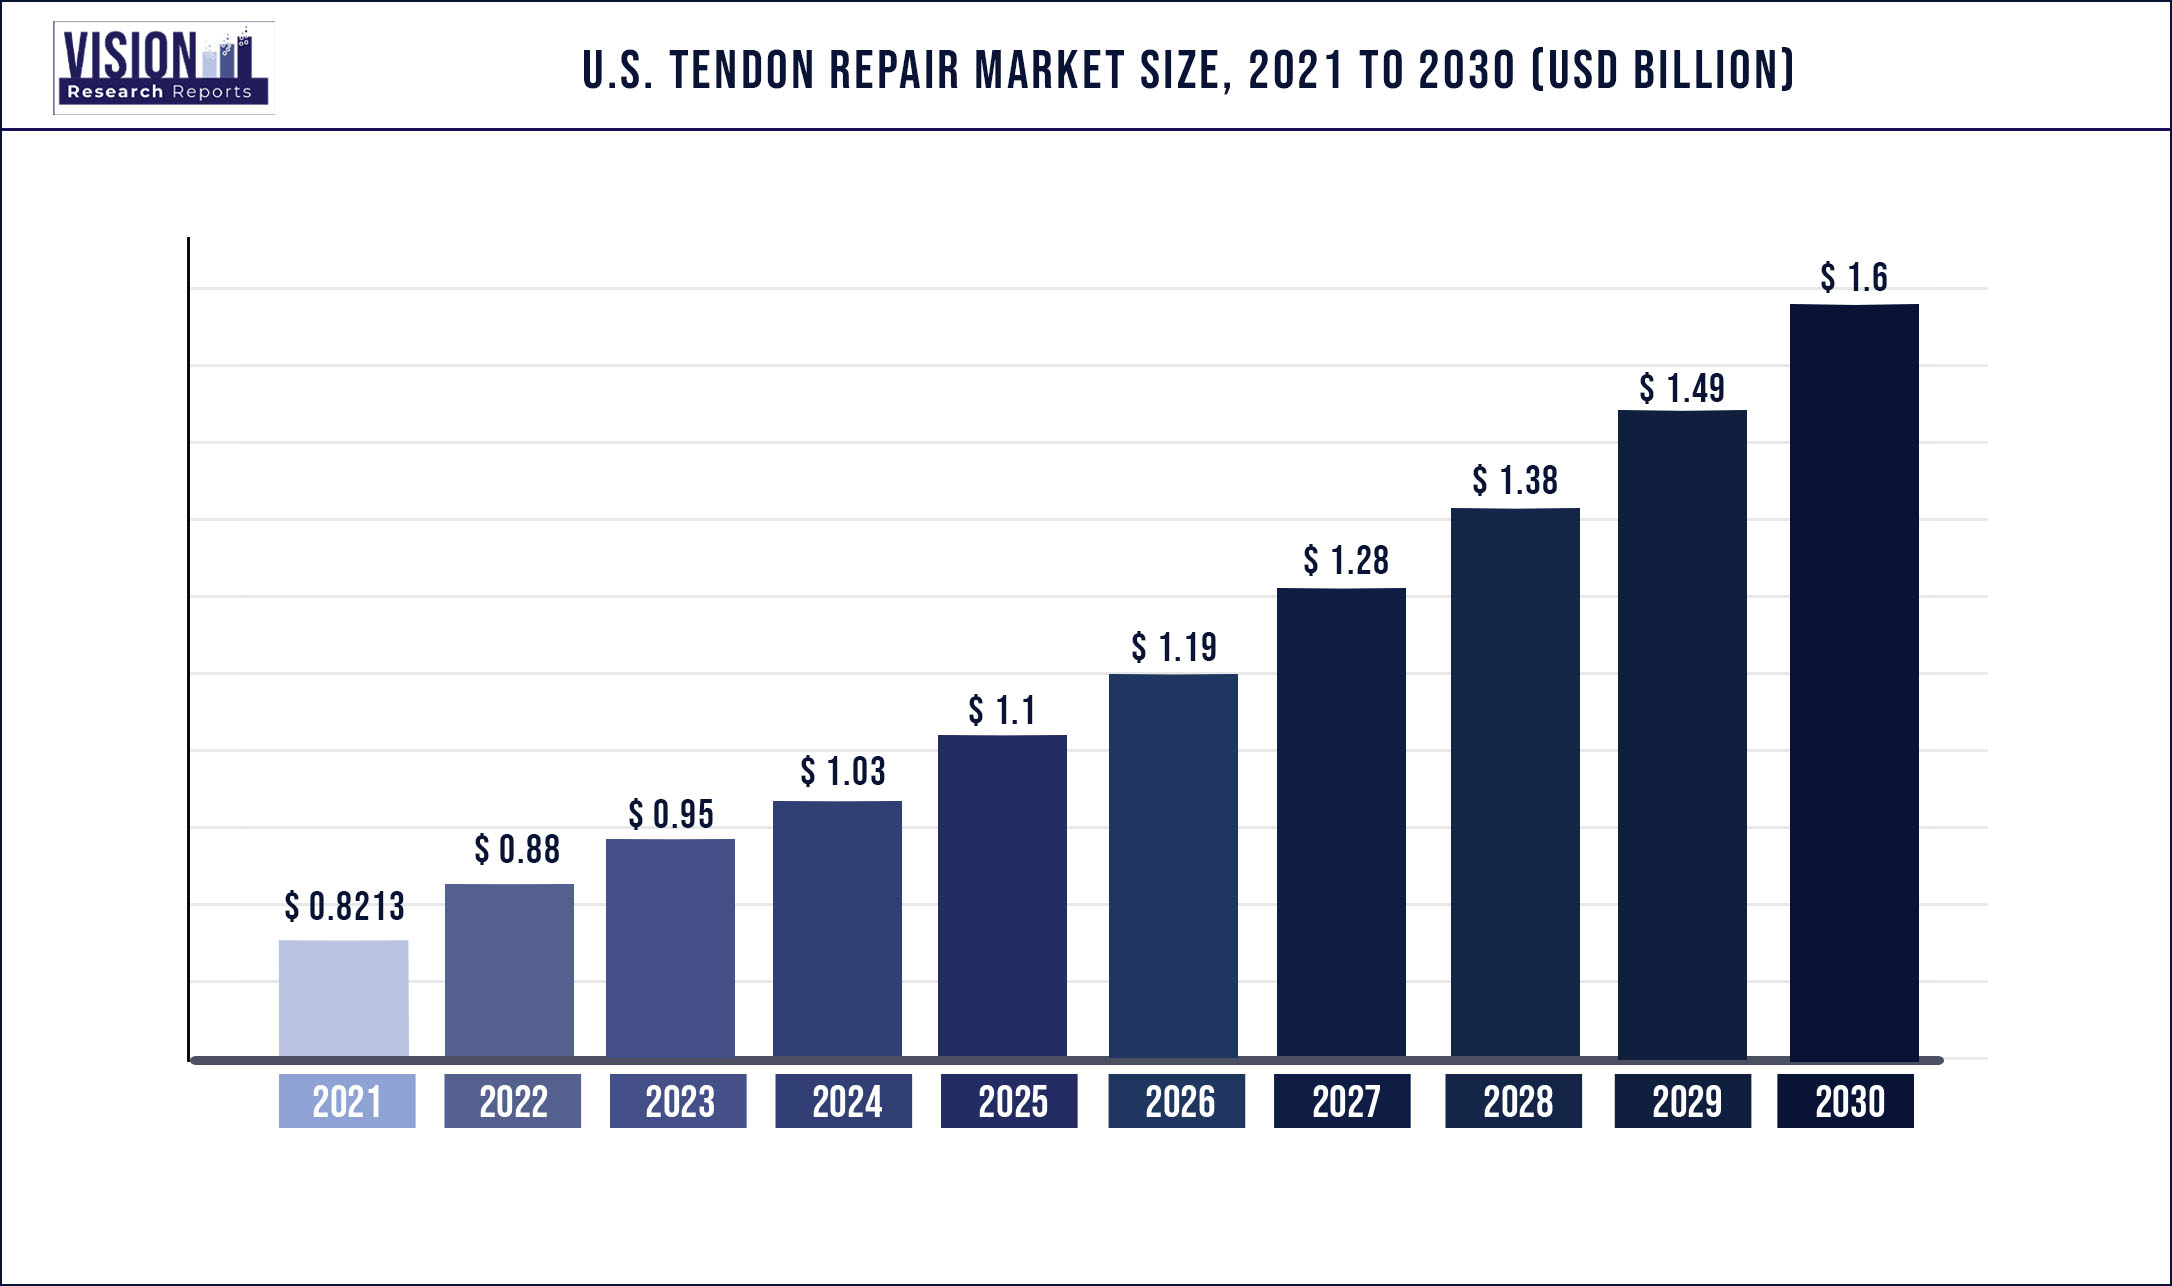 U.S. Tendon Repair Market Size 2021 to 2030